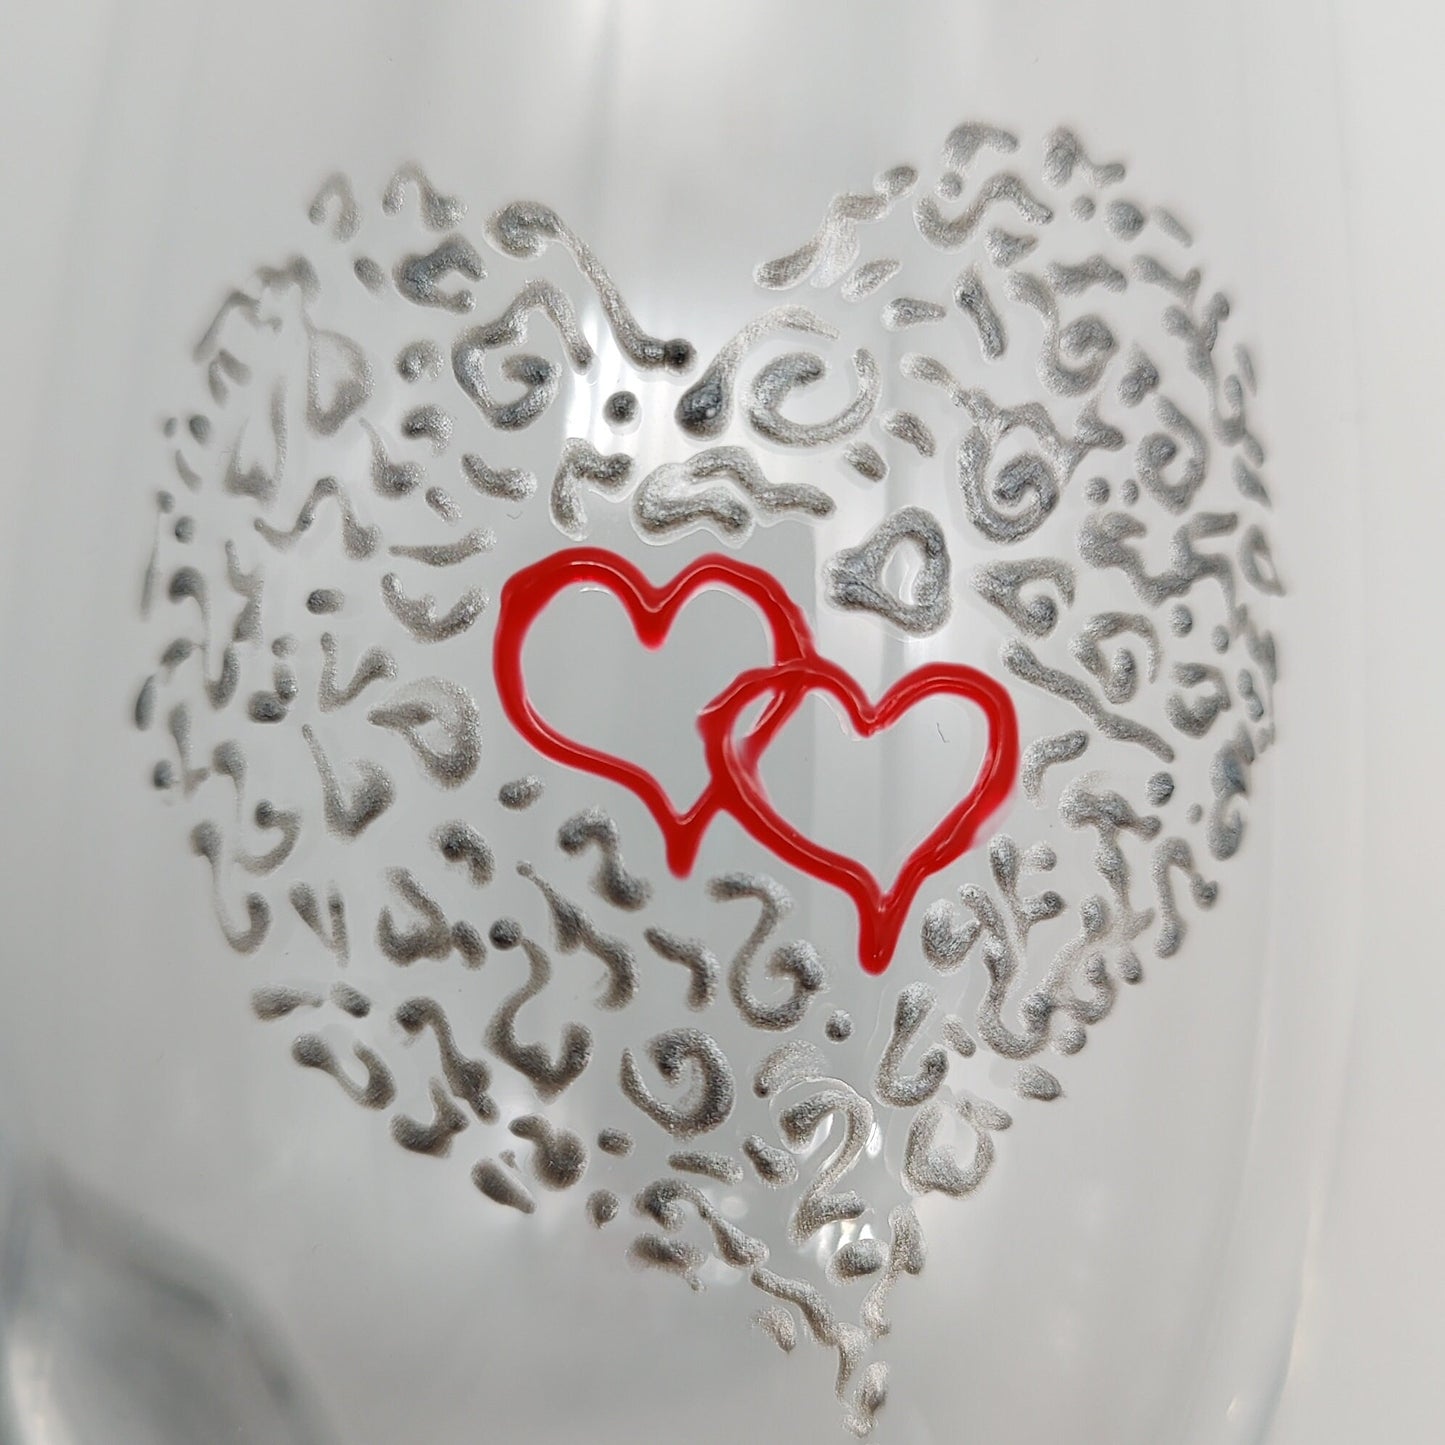 Valentine hearts design large Gin glass